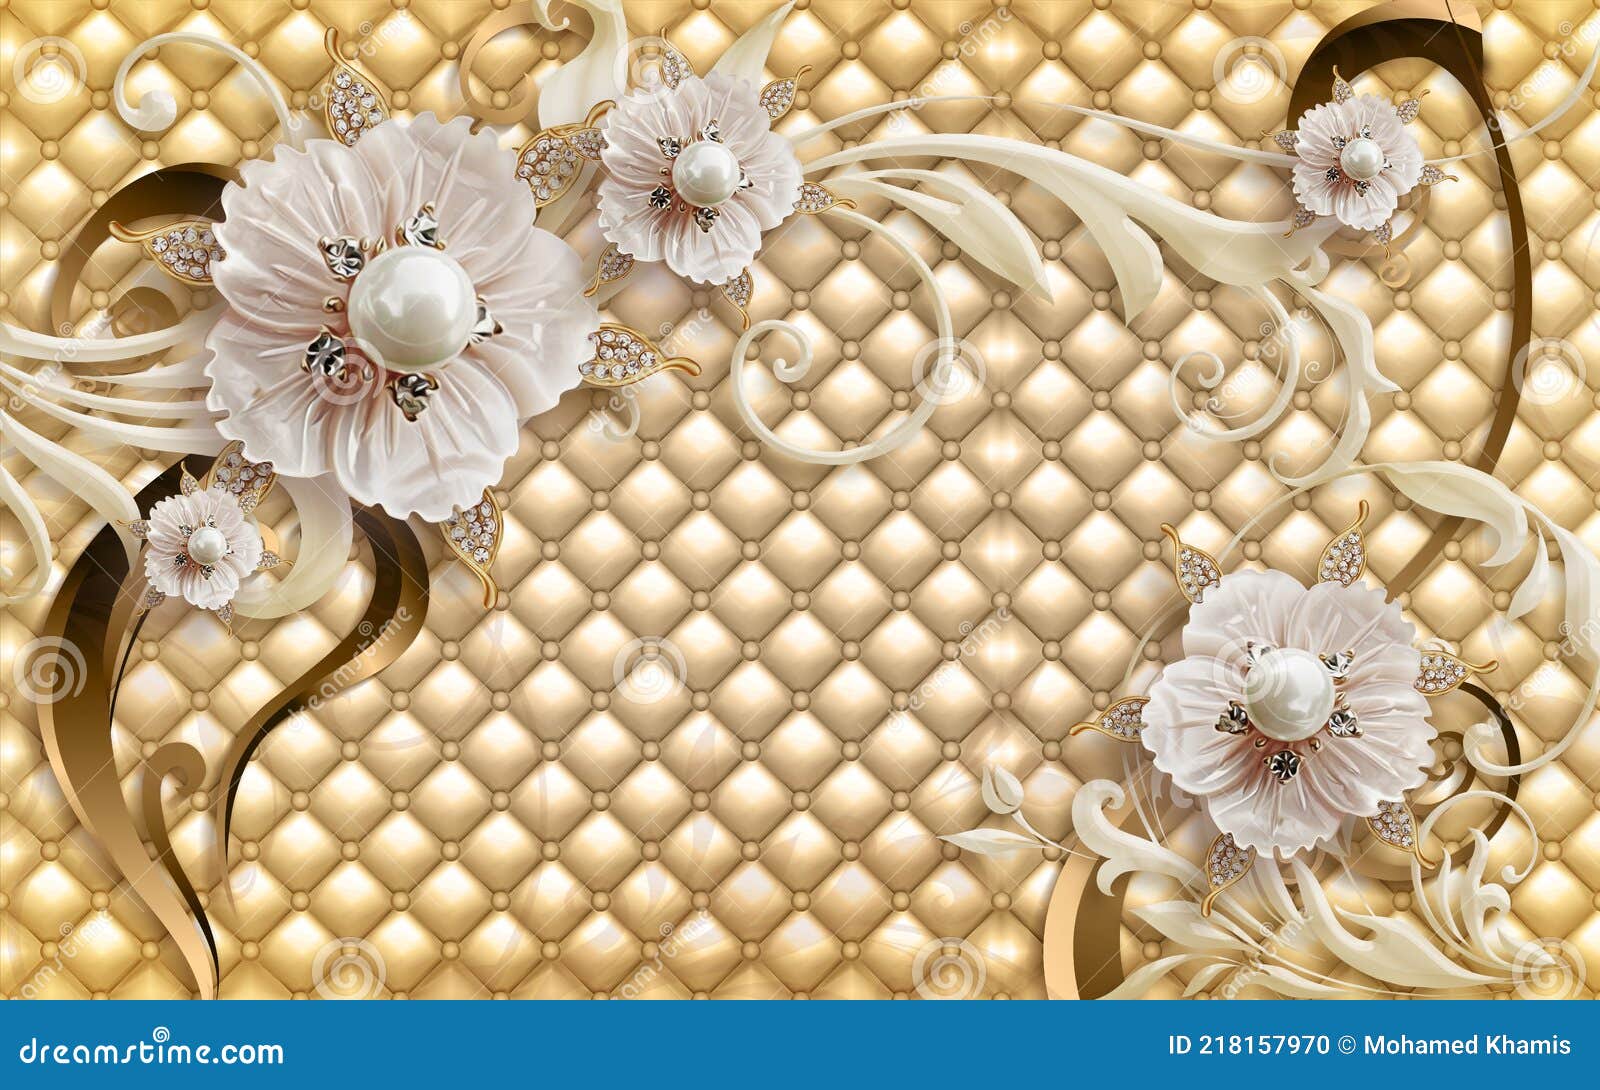 3d Wallpaper Diamond Flowers on Golden Leather Background Stock Photo -  Image of jewelry, diamond: 218157970